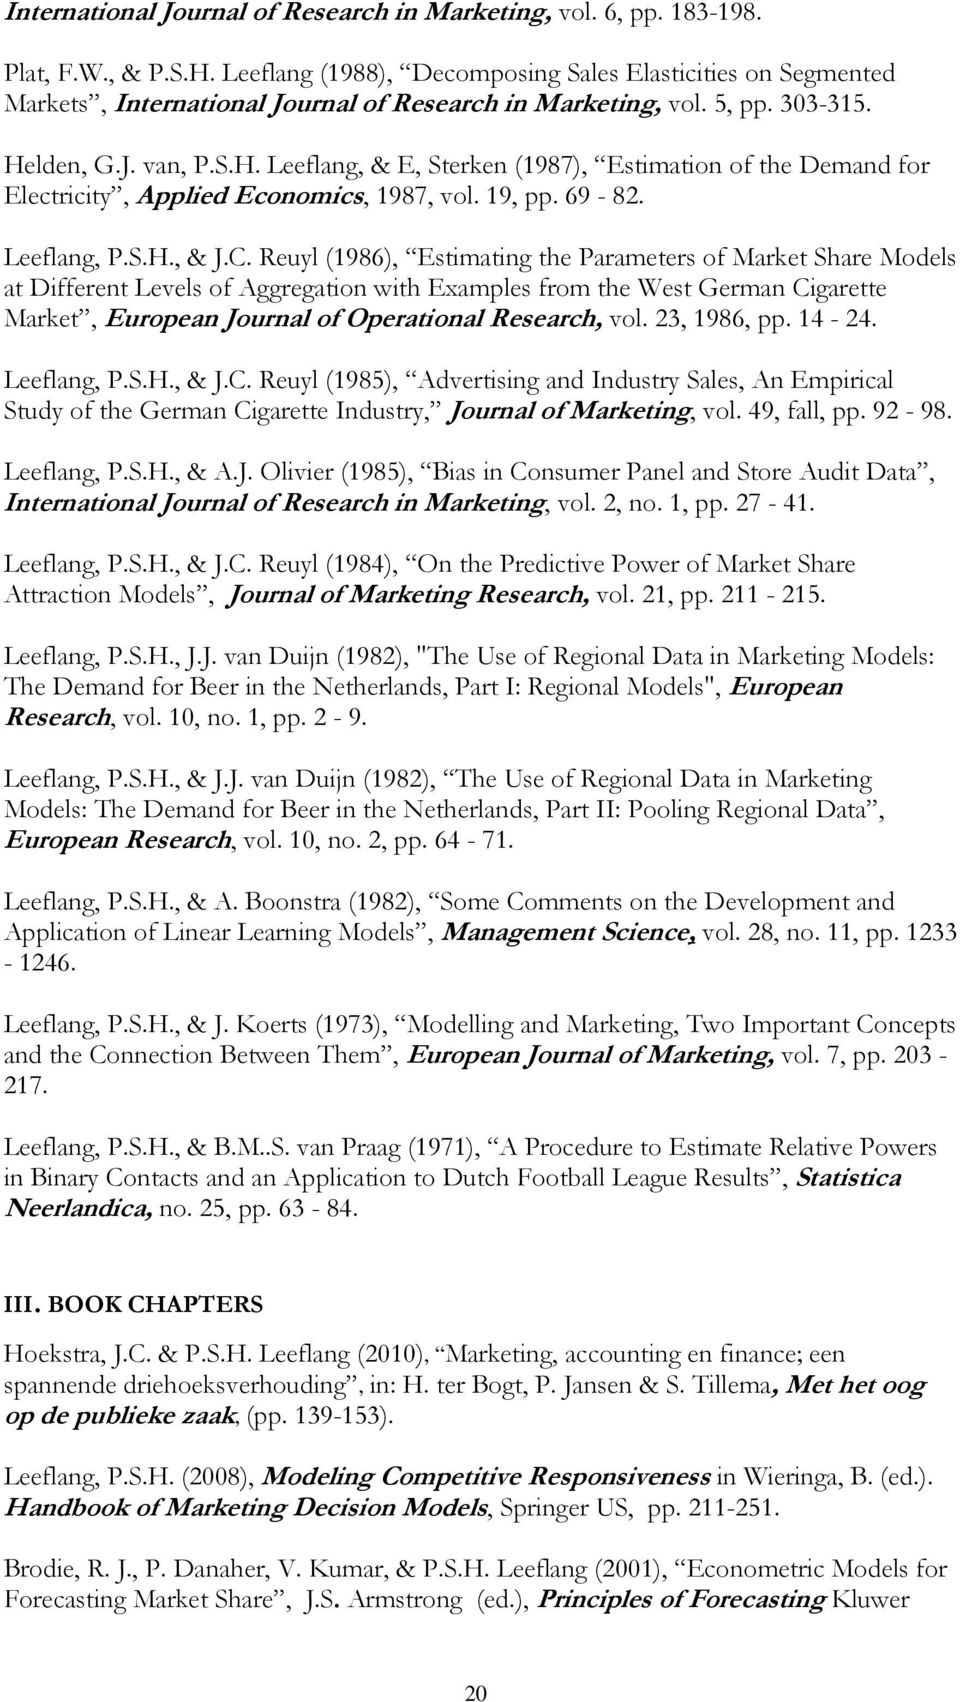 lden, G.J. van, P.S.H. Leeflang, & E, Sterken (1987), Estimation of the Demand for Electricity, Applied Economics, 1987, vol. 19, pp. 69-82. Leeflang, P.S.H., & J.C.